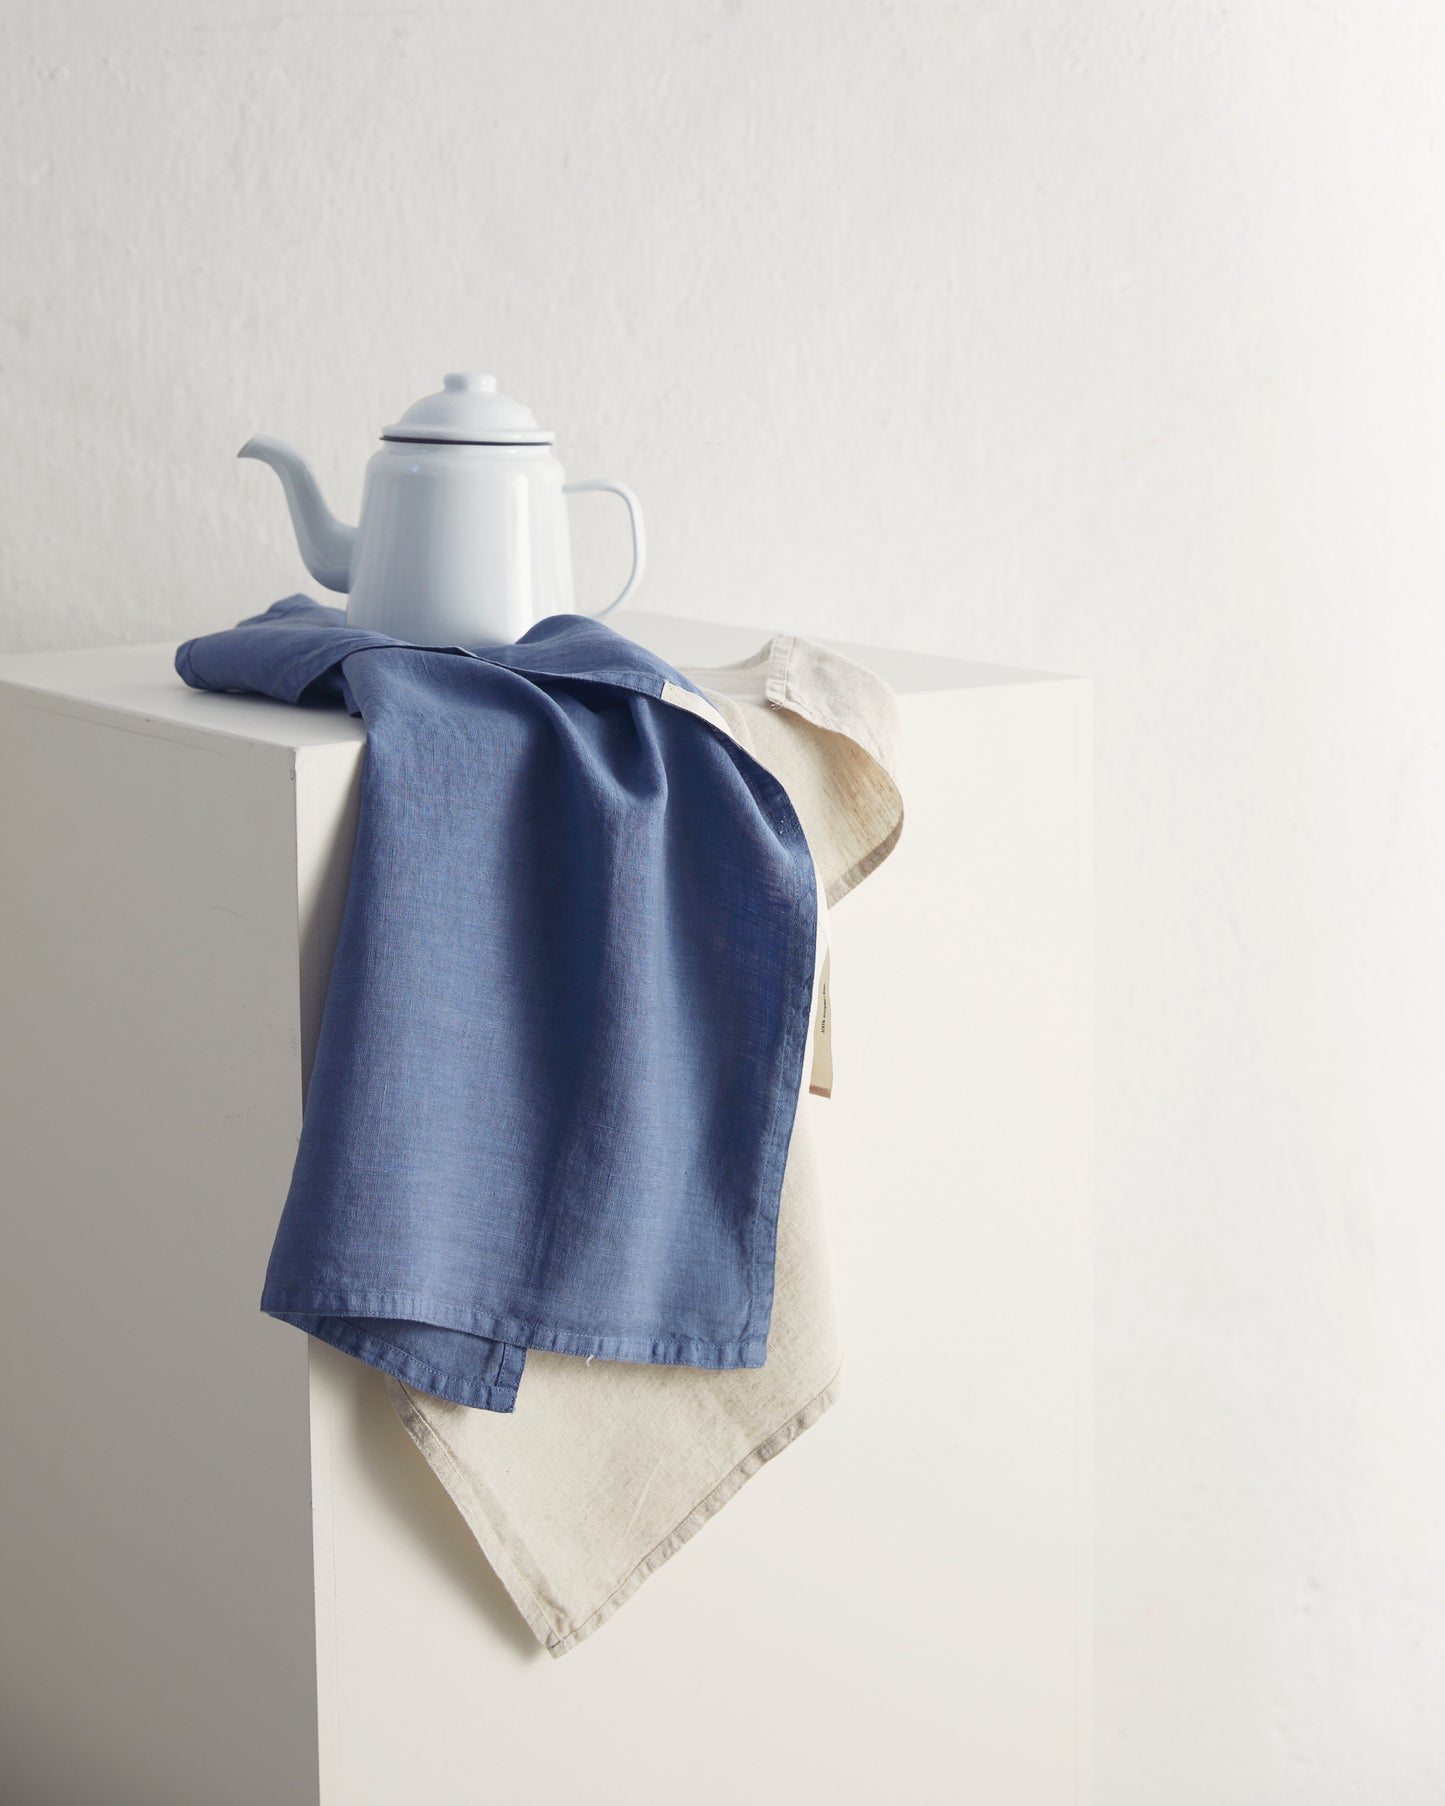 Aiayu "Linen Kitchen Towel" (set of 2 pcs) Waterfall